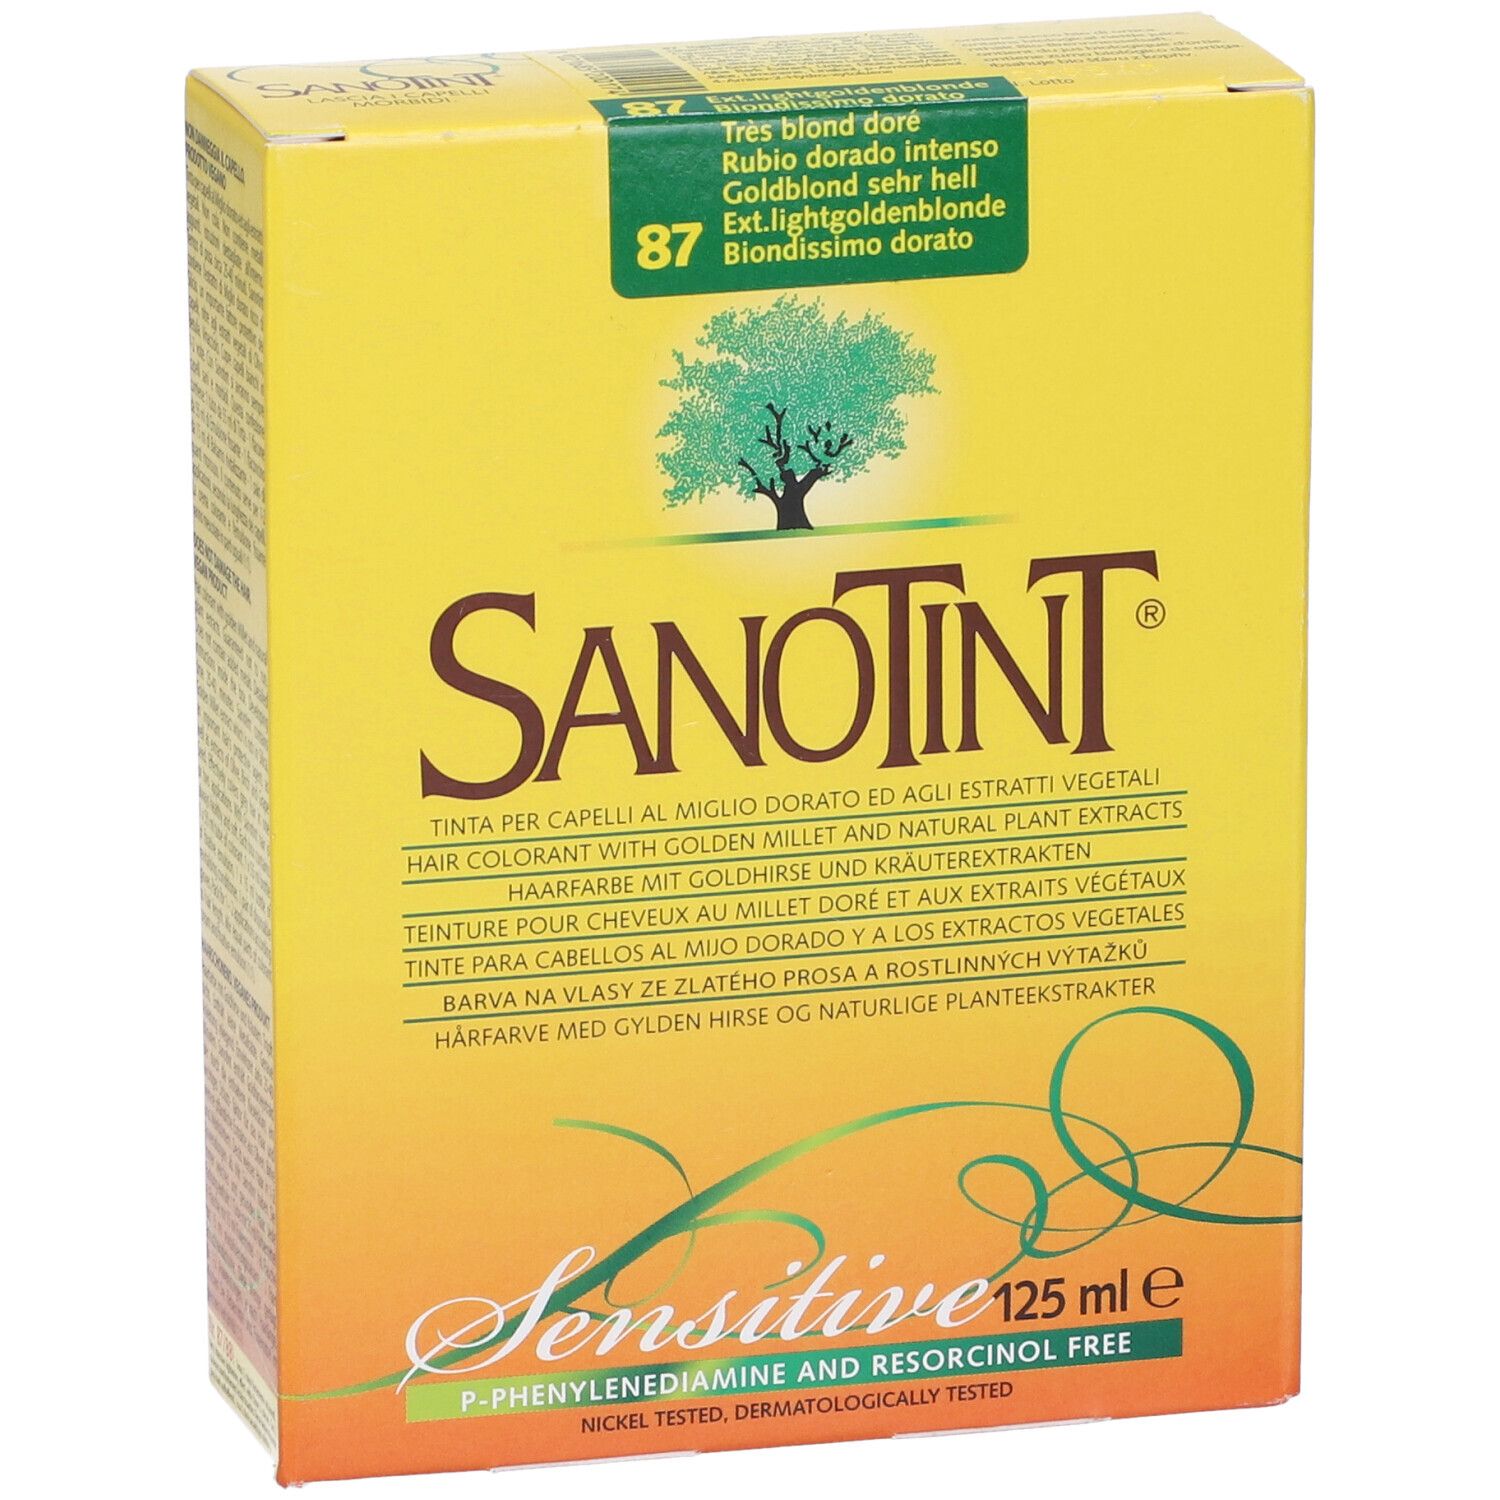 Sanotint Light Biondiss Dor 87